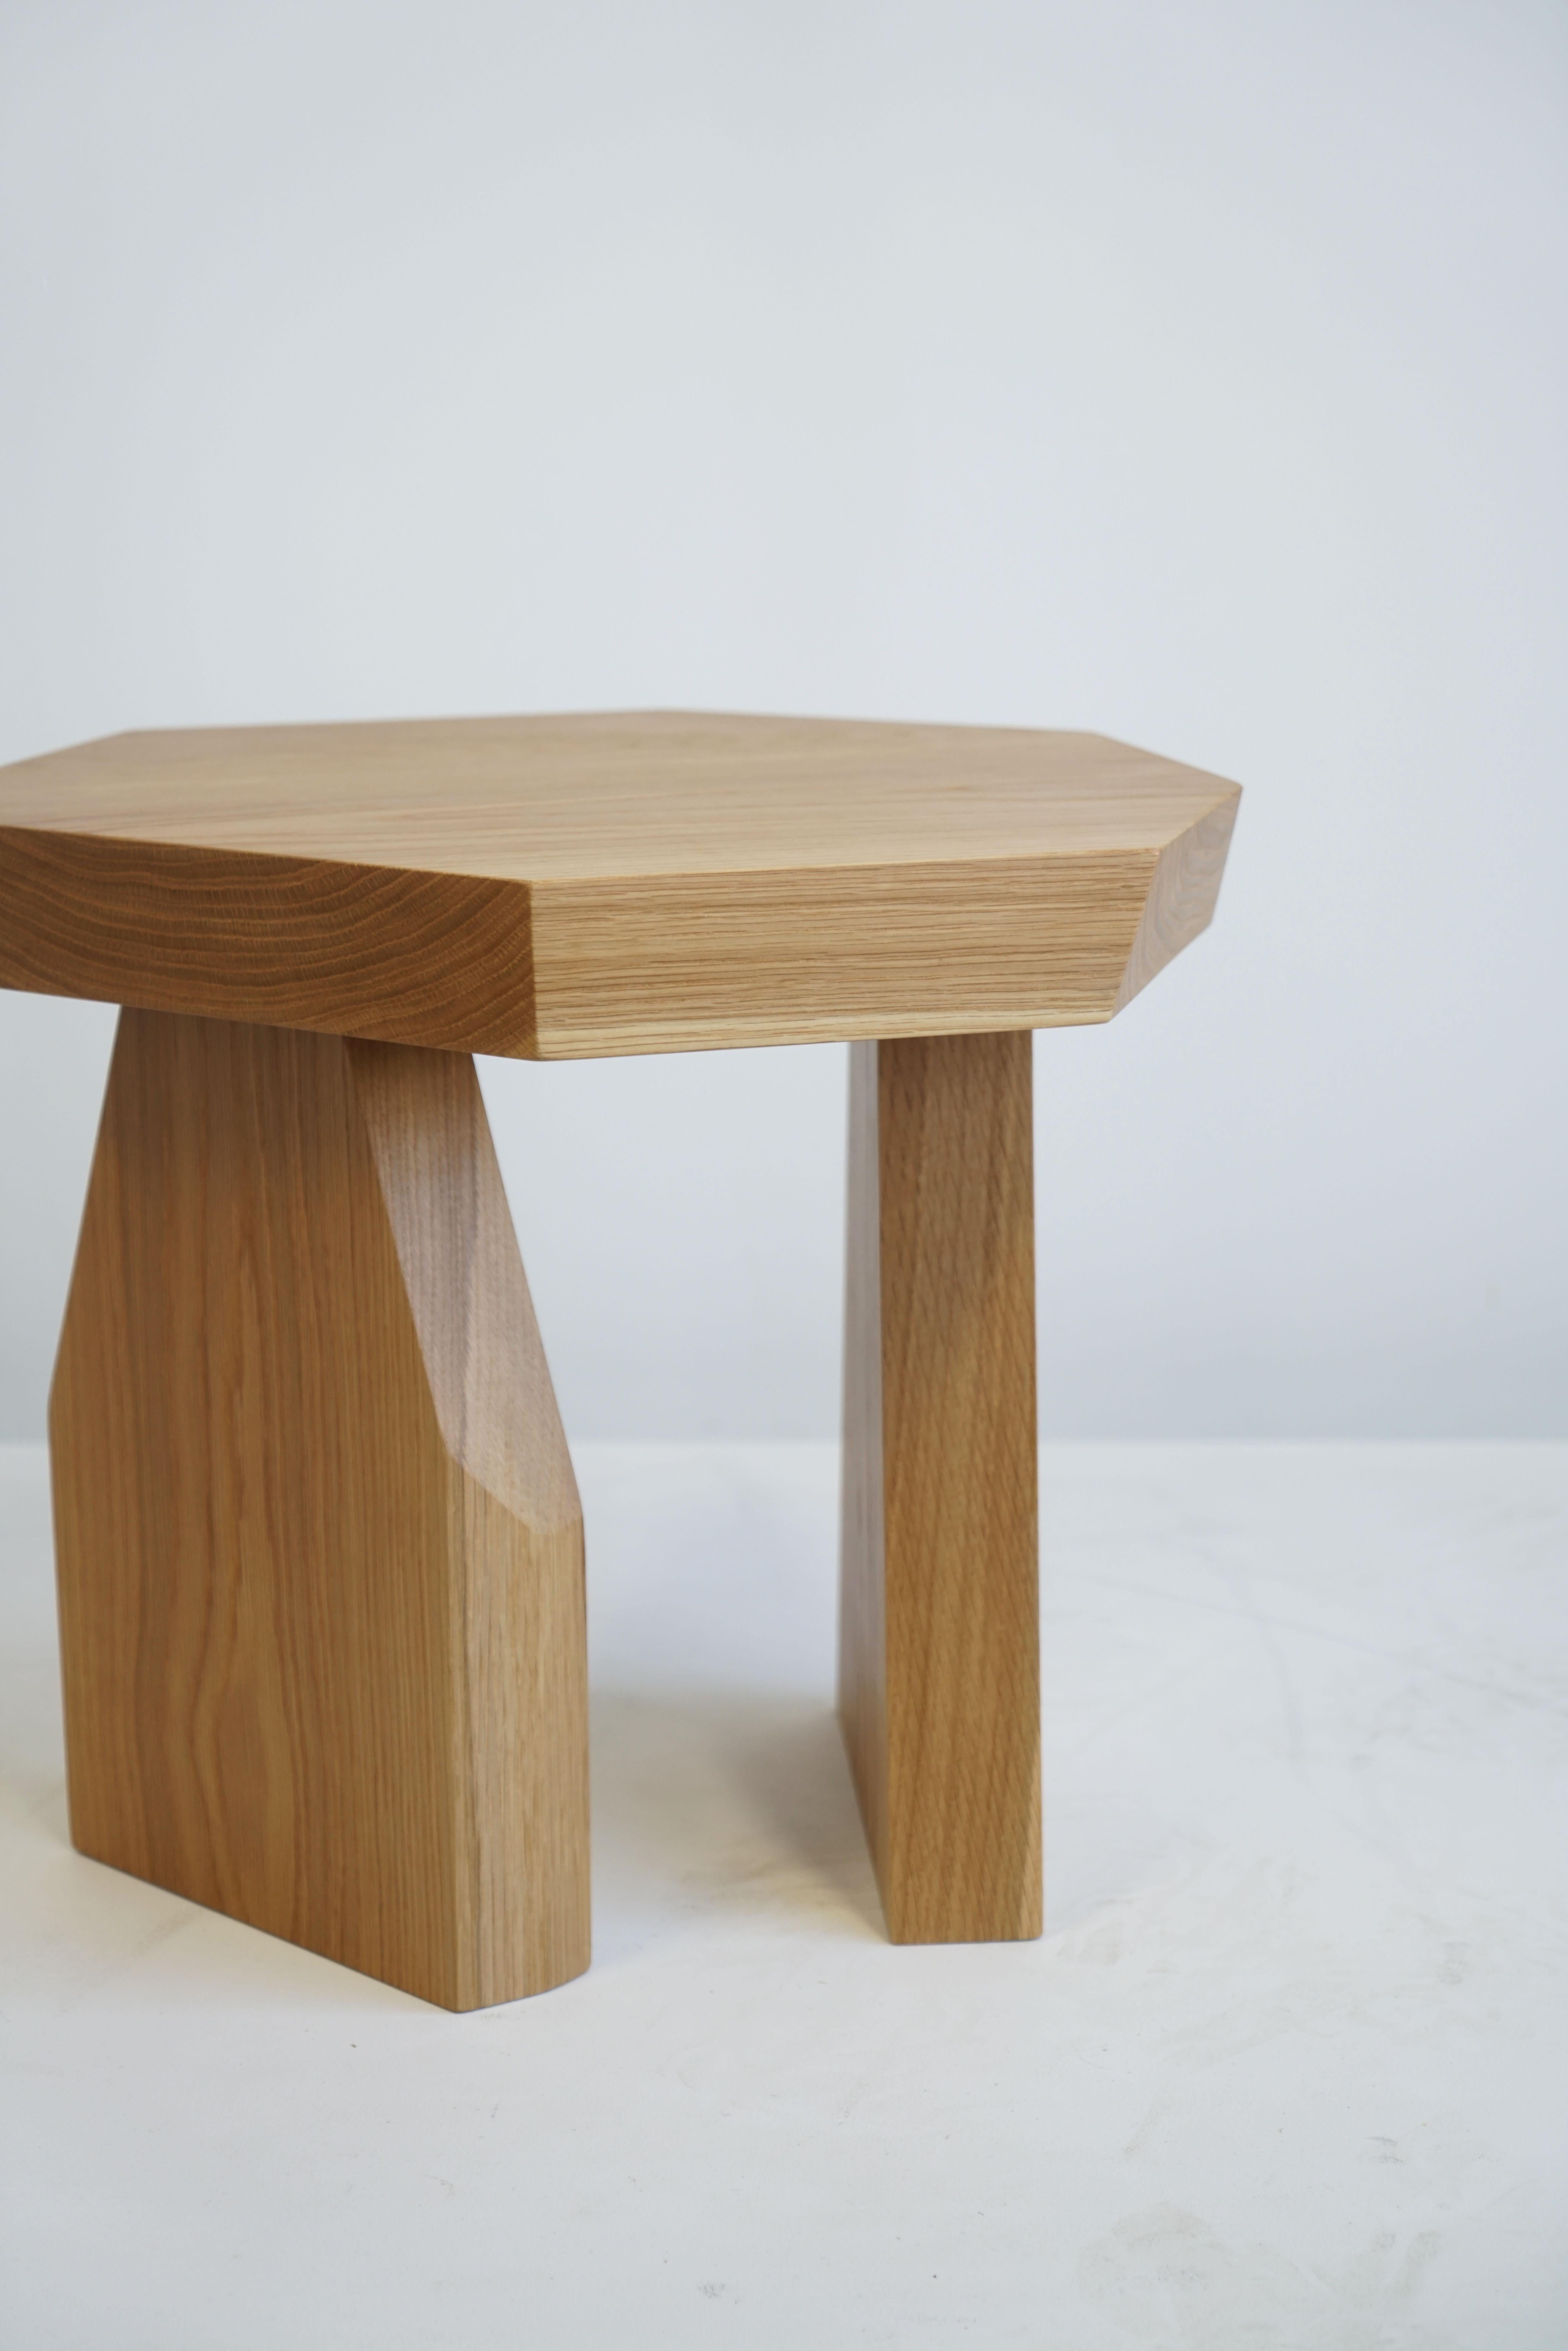 Geometric Modern Solid Wood White Oak Side Table by Last Workshop For Sale 4